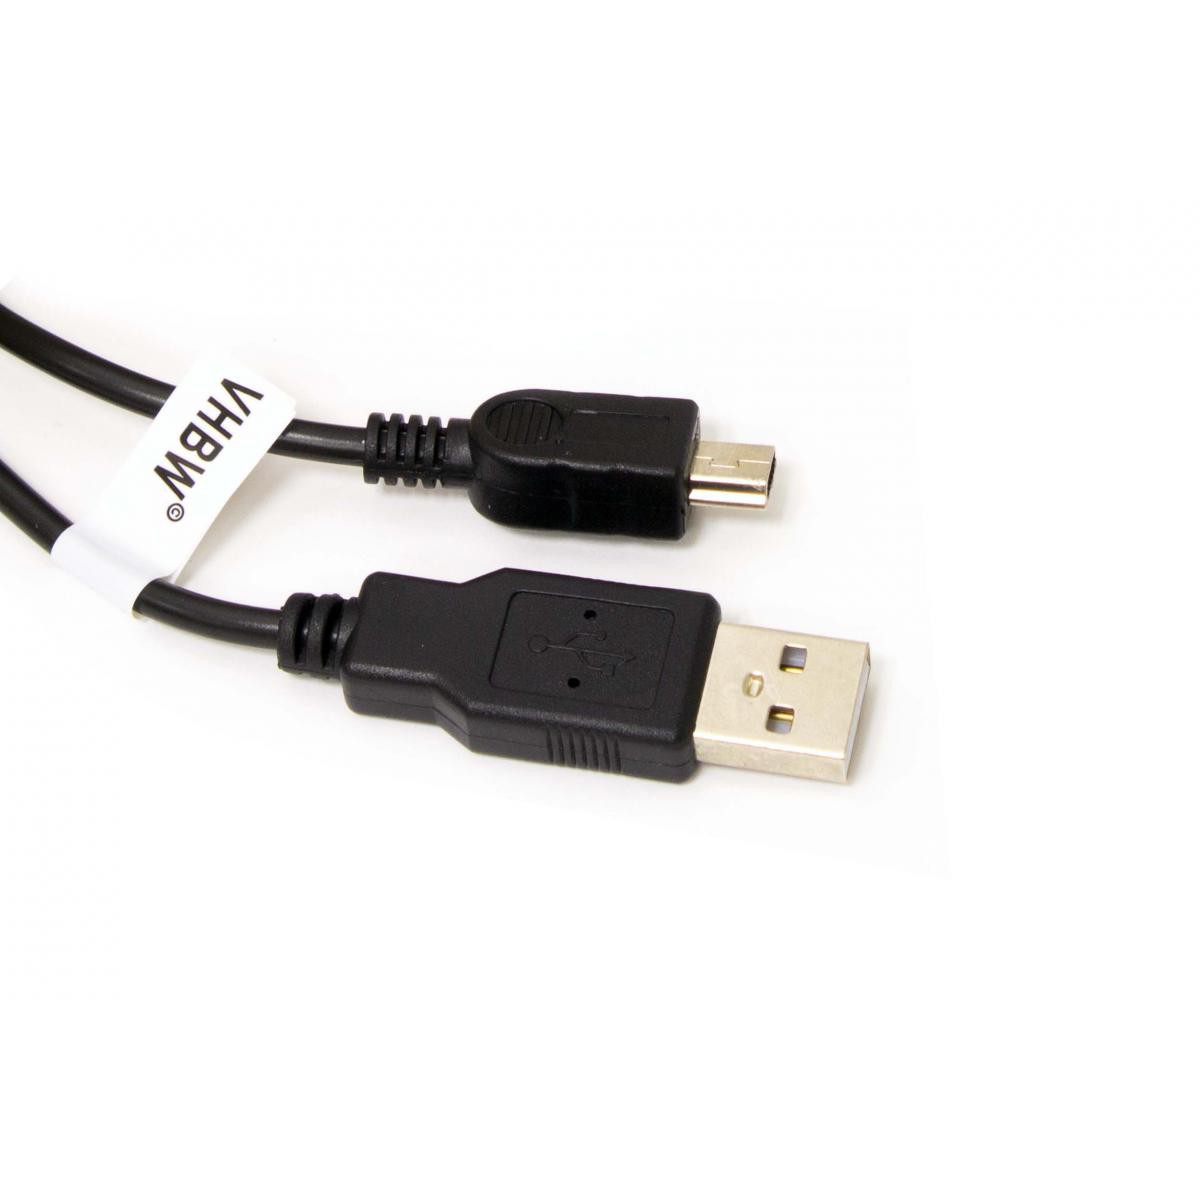 Vhbw - Câble USB A-Mini-B 5 pôles noir/black, longueur 1m, pour ALCATEL, remplace Canon IFC-300PCU / Nikon UC-E3 / Pentax I-USB6 / Sony VMC-14UMB2 - Câble antenne